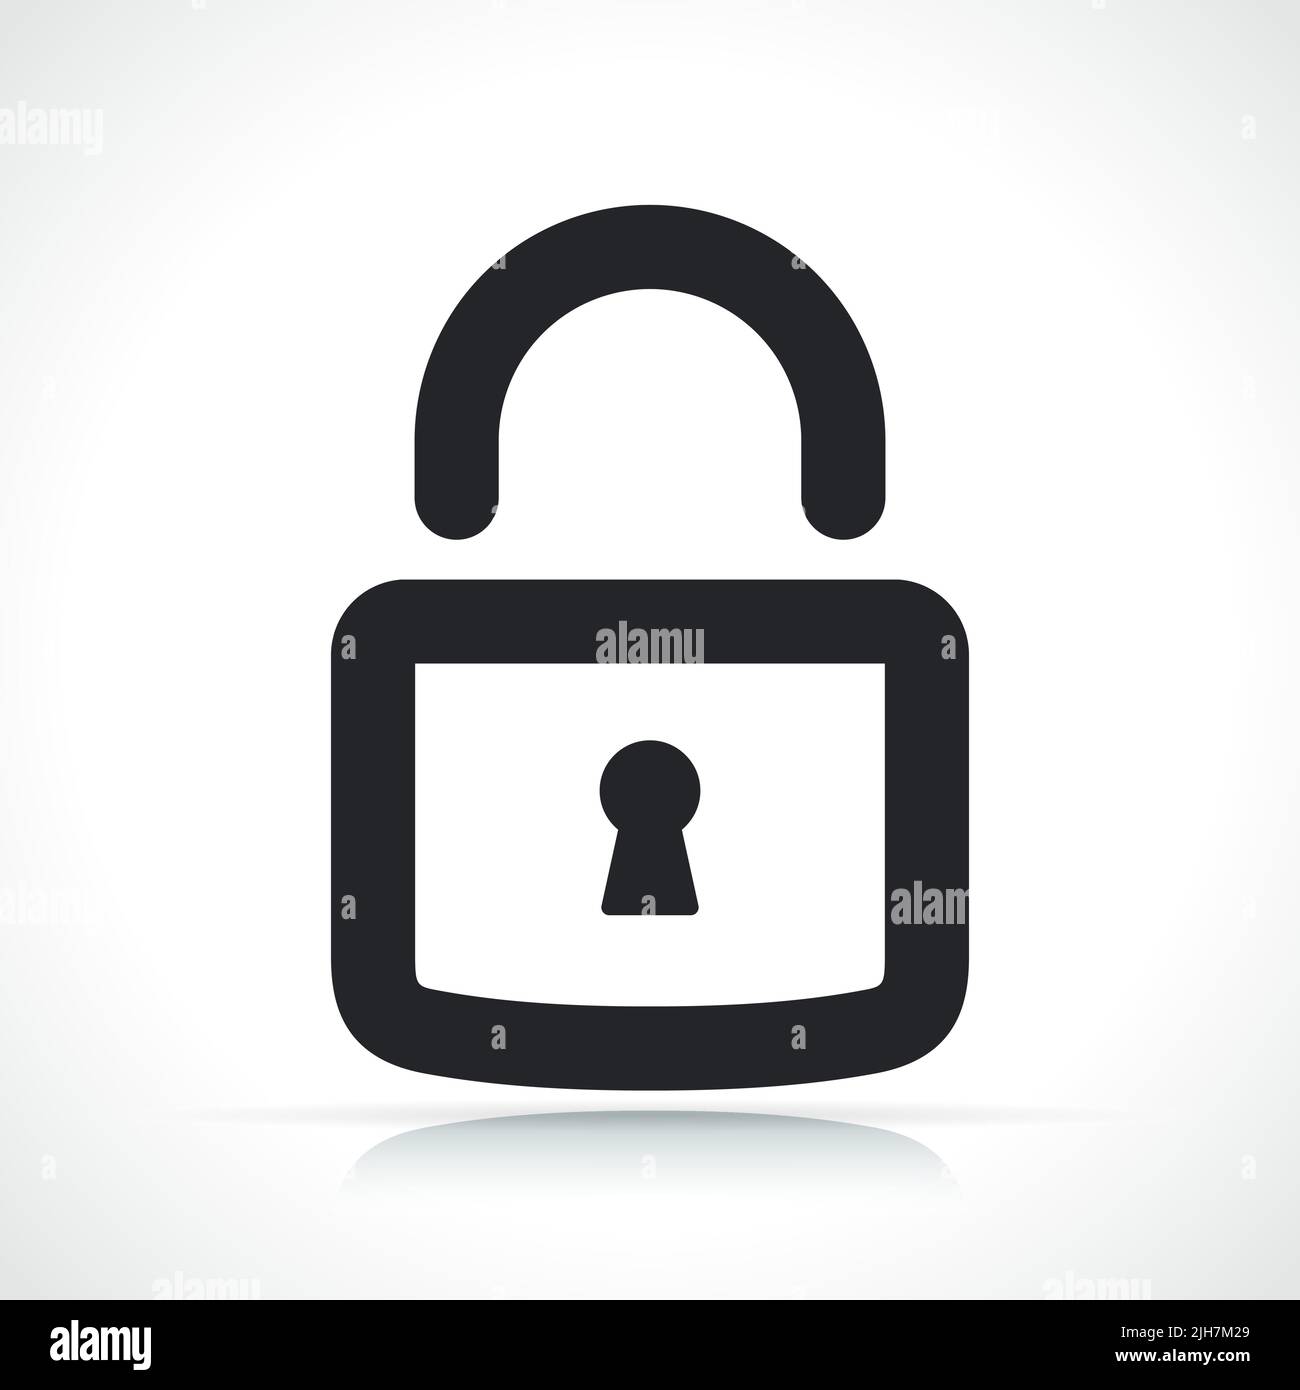 padlock or lock black icon isolated illustration Stock Vector